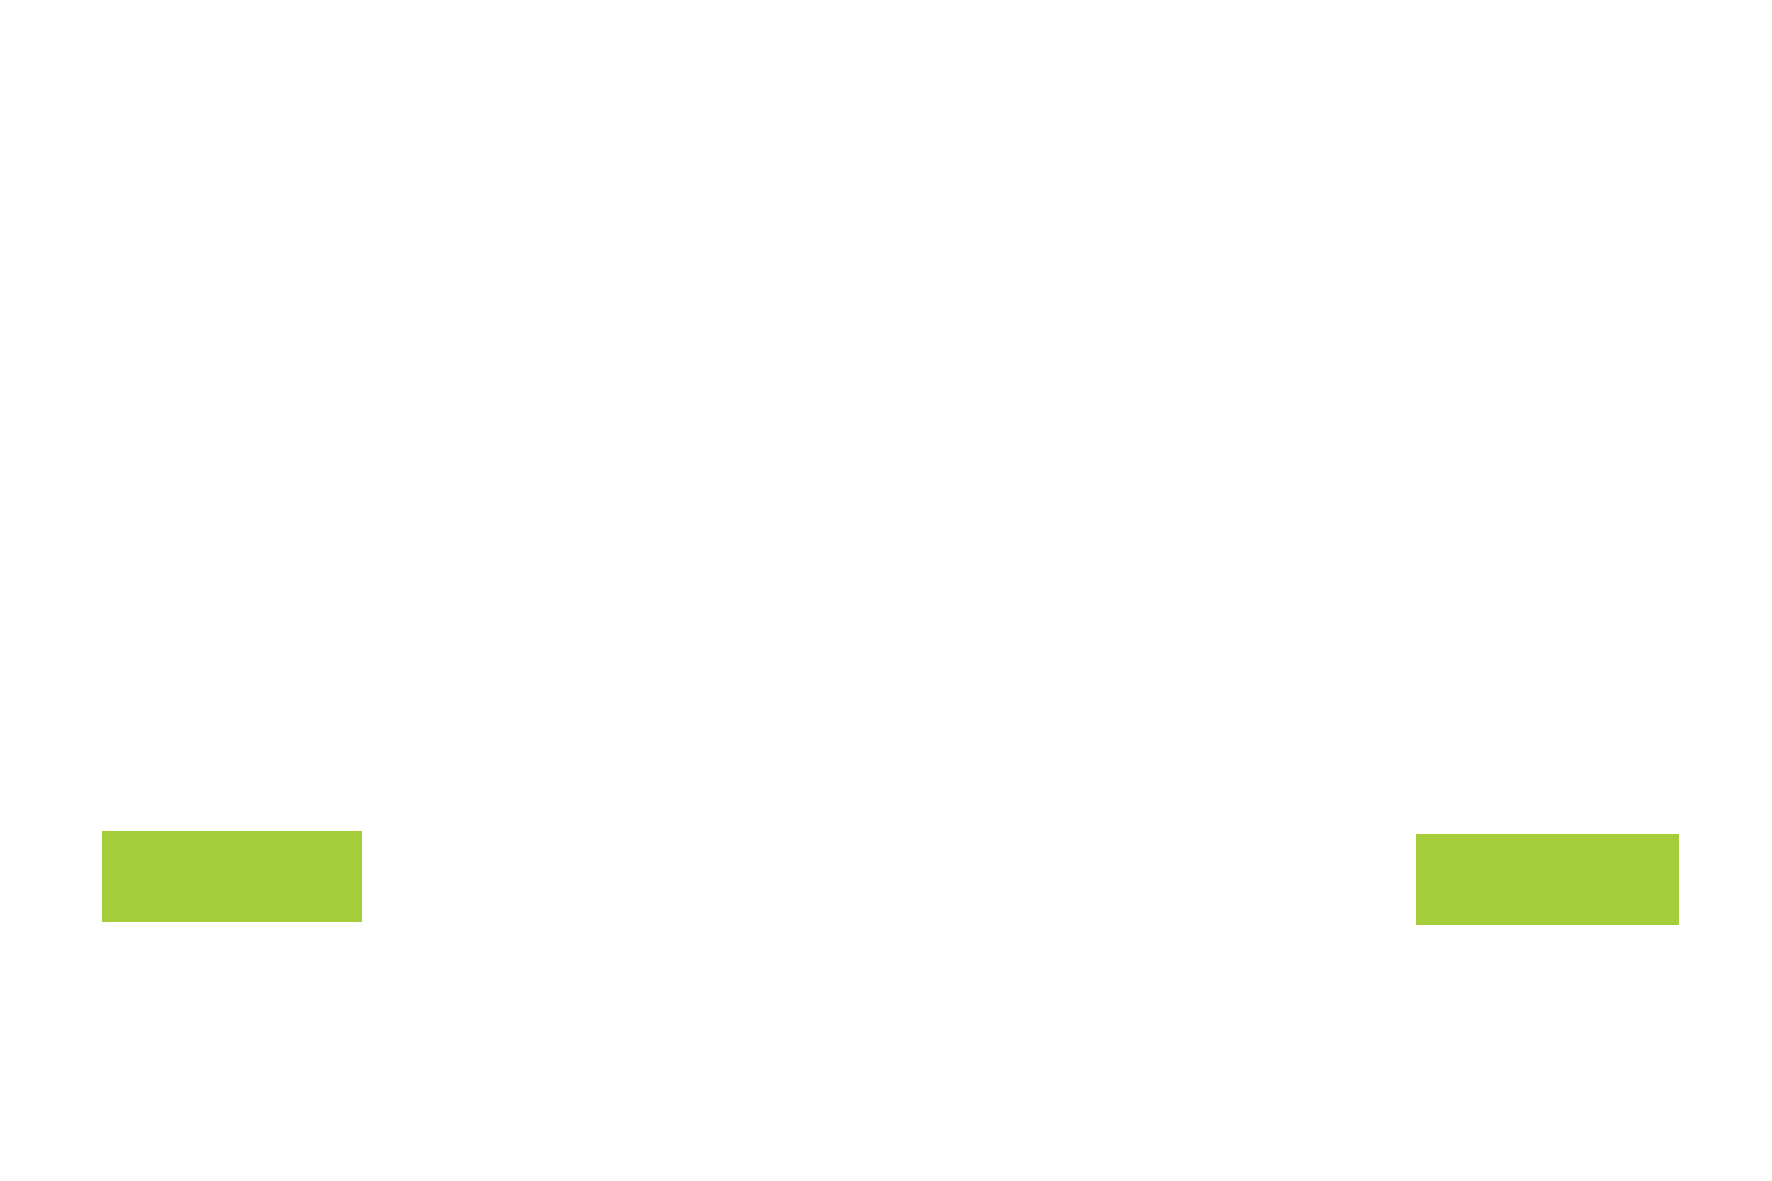 logo METbodyzone